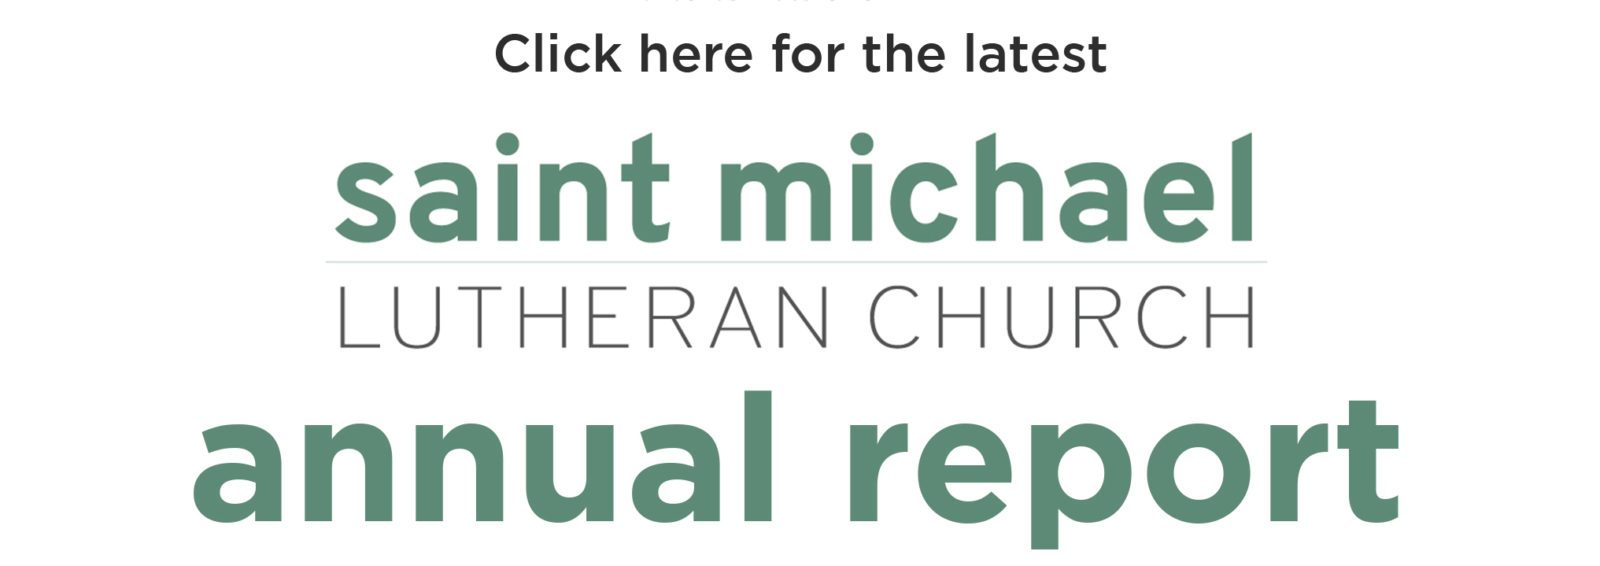 saint michael lutheran church annual report